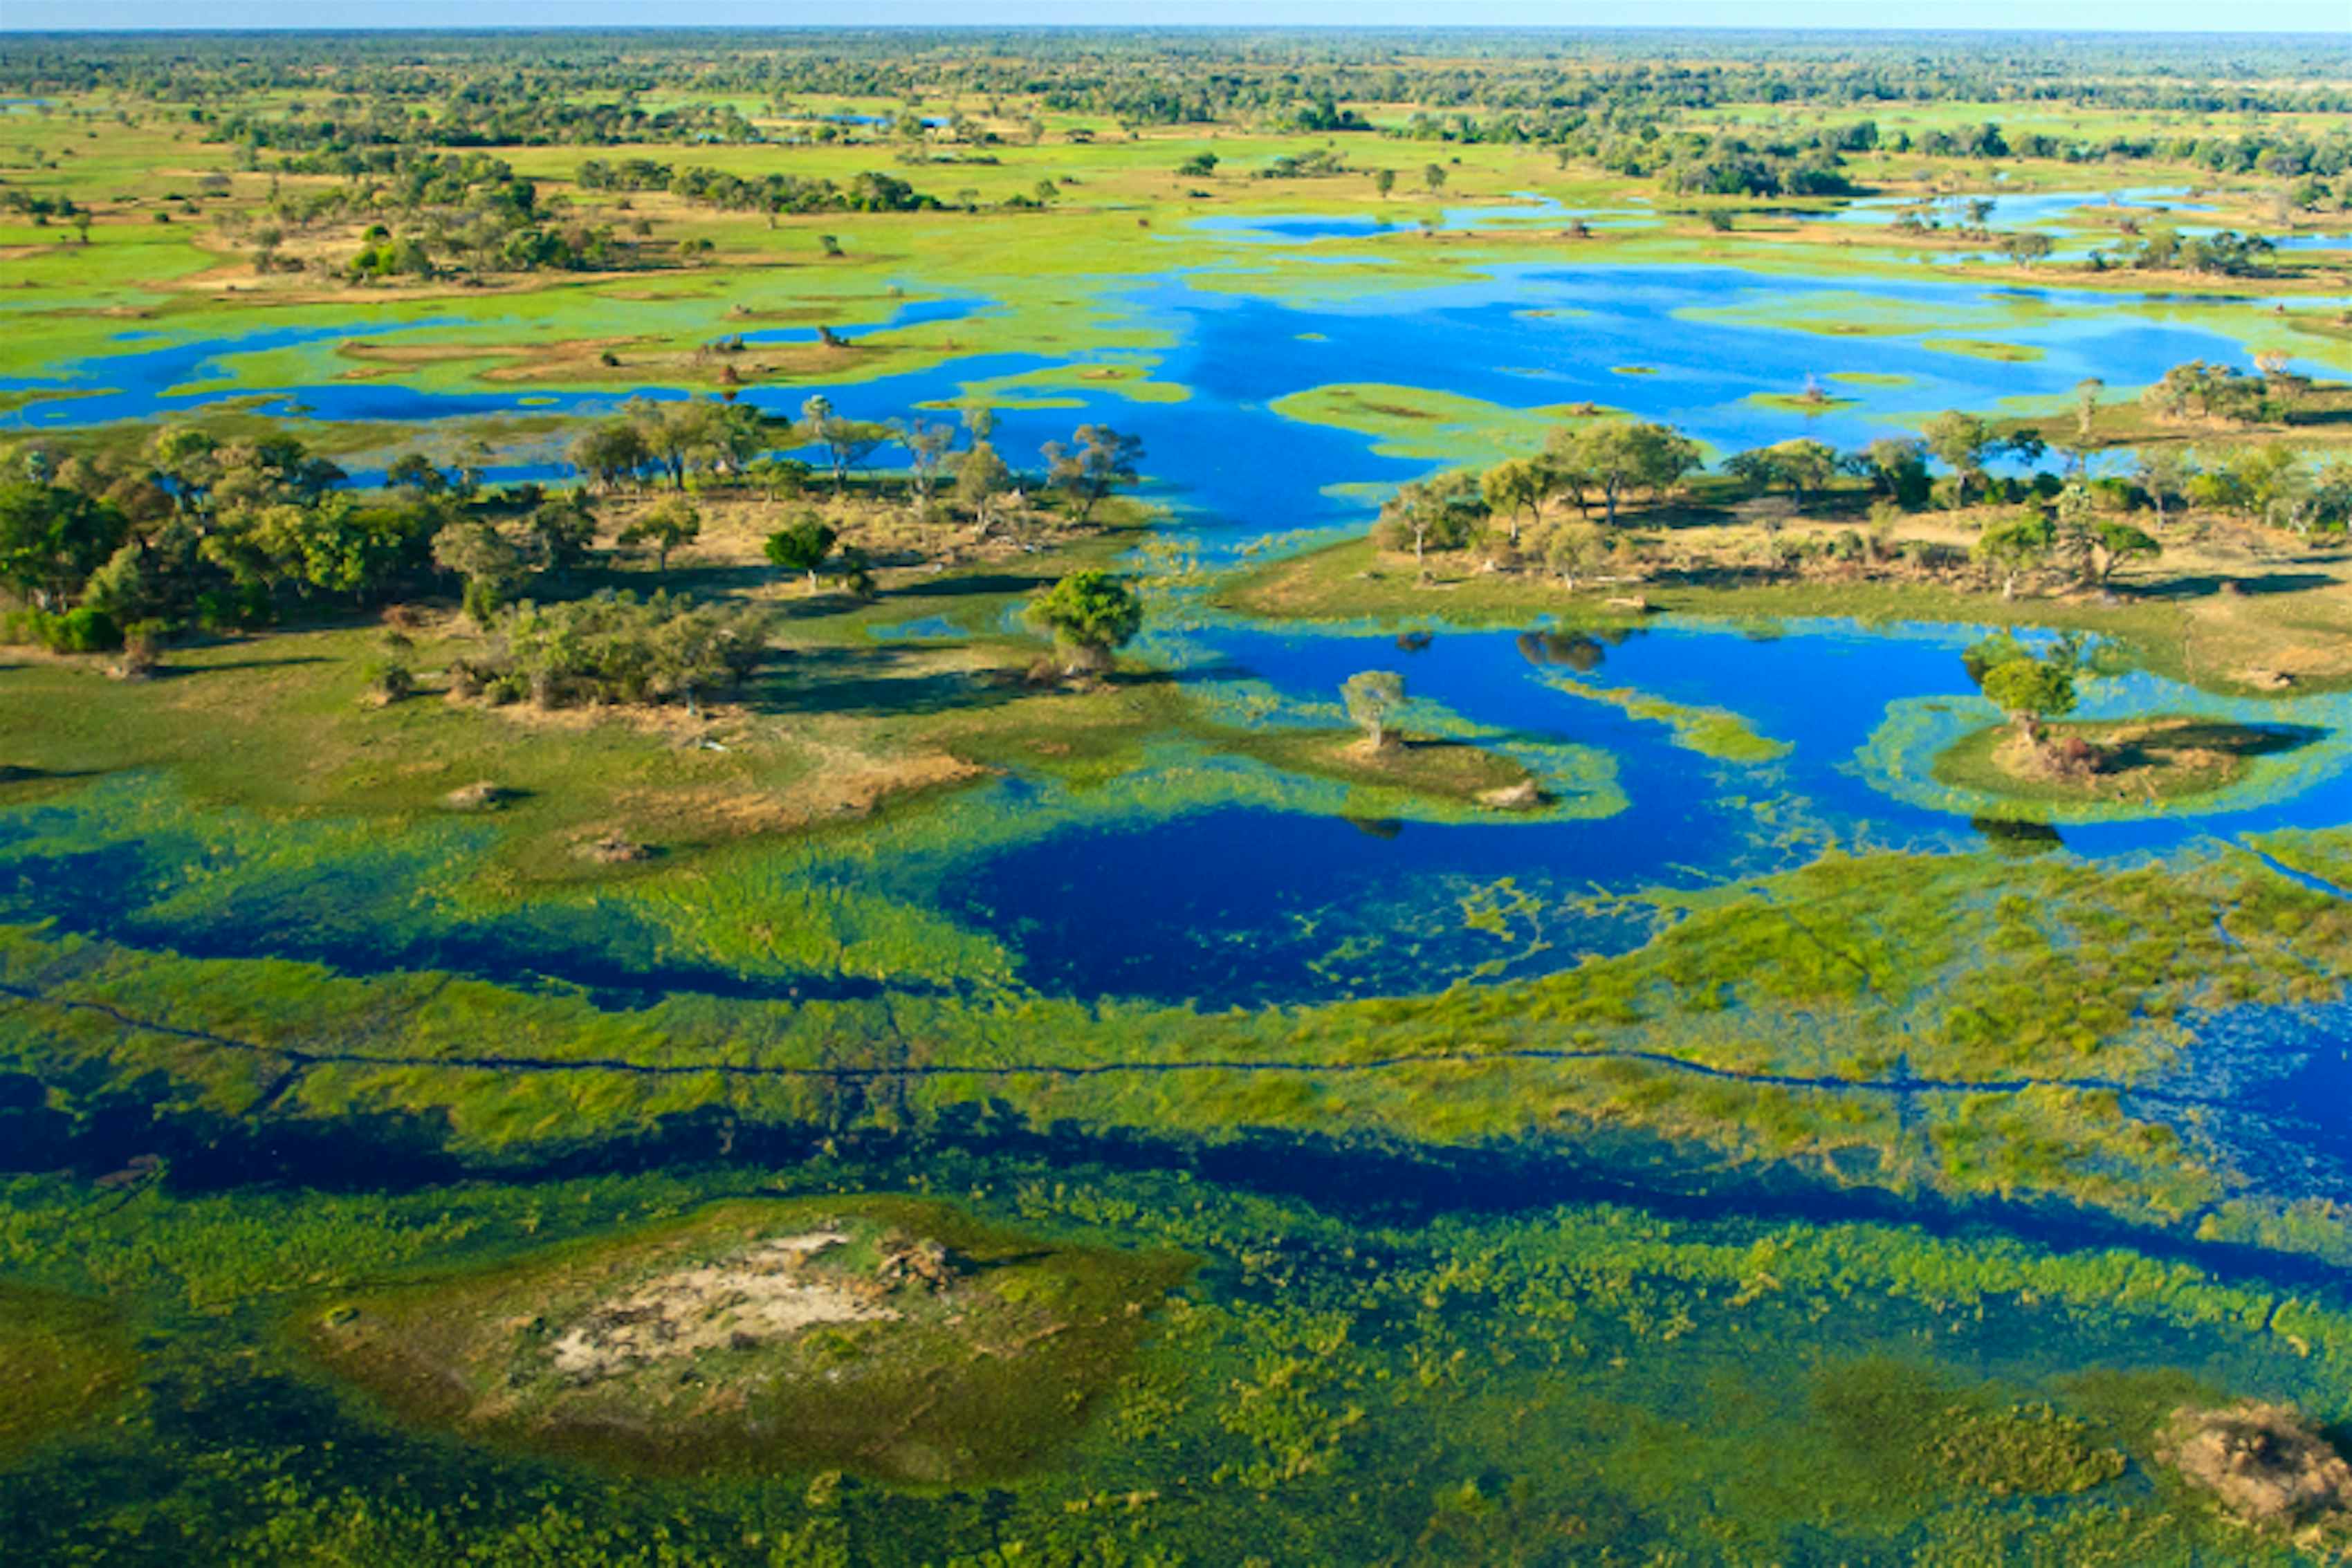 river safari okavango